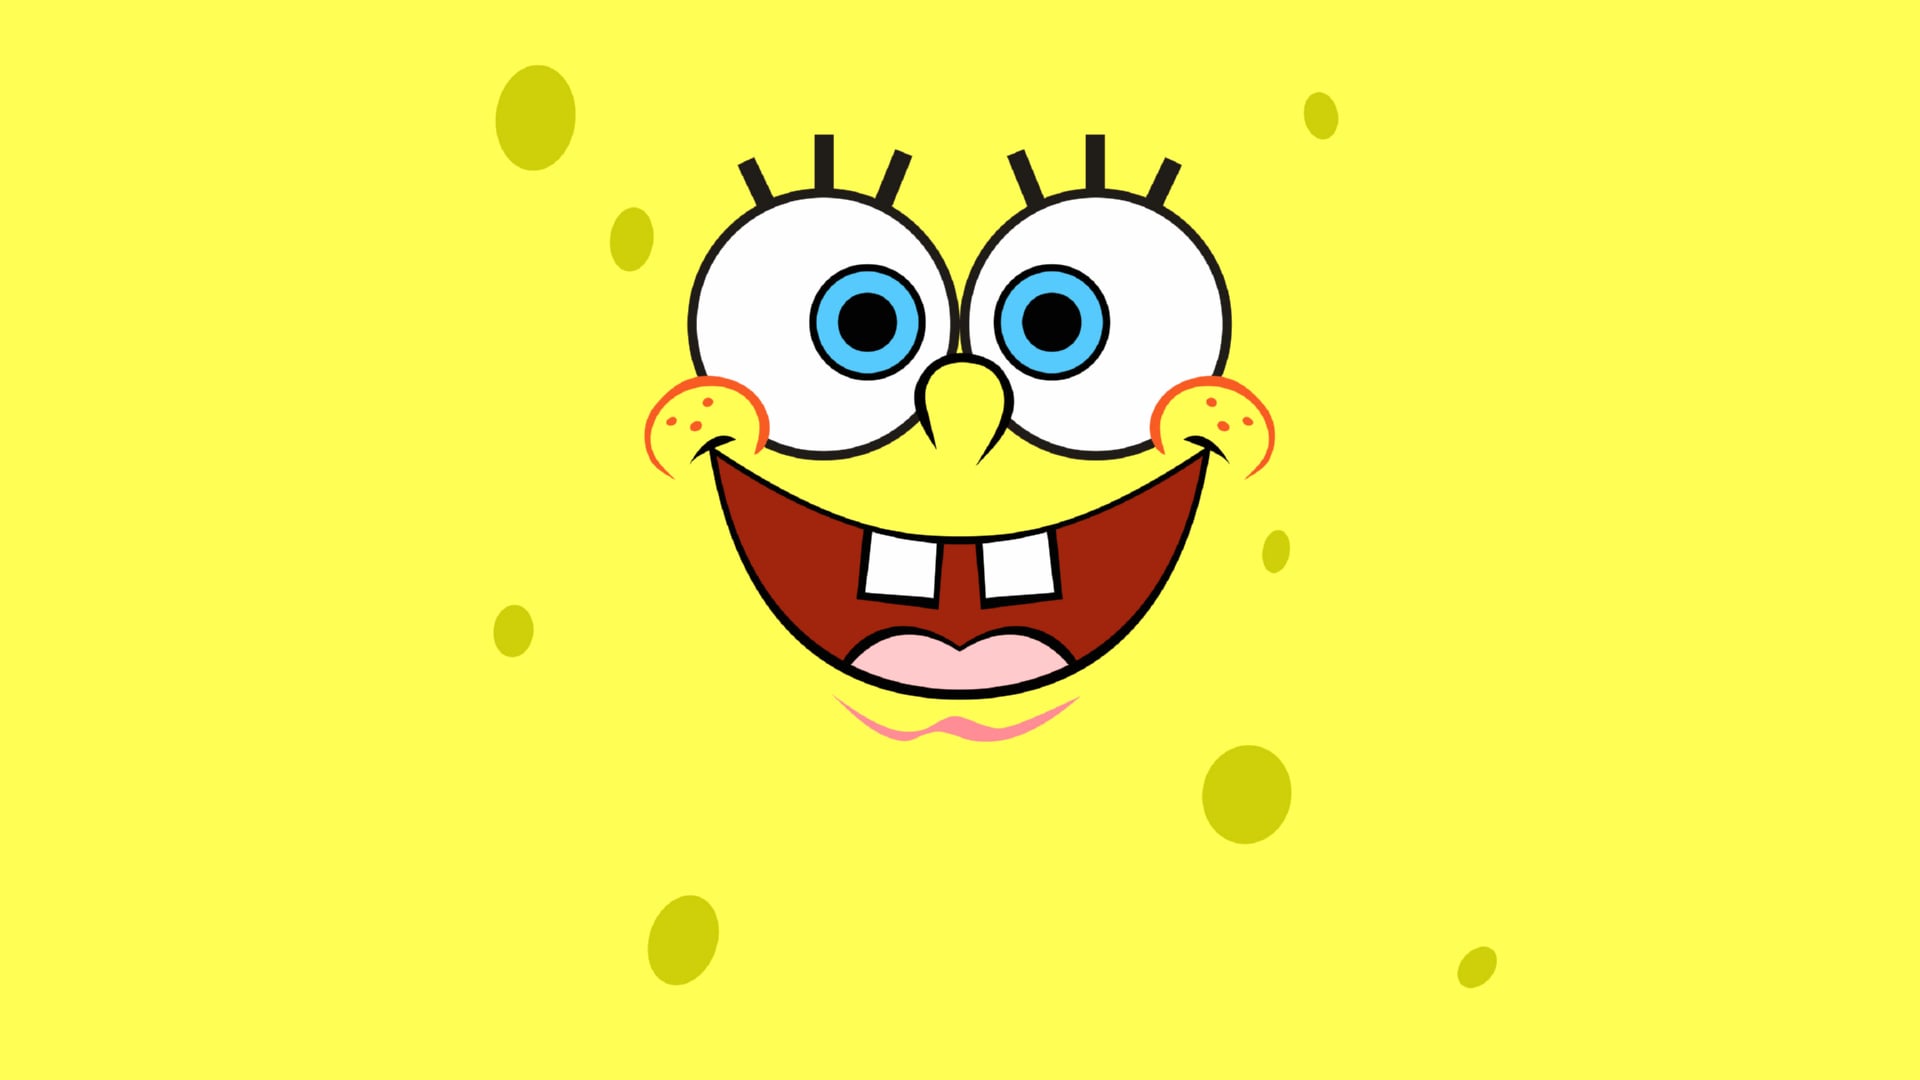 Digital Art SpongeBob smiley face Wallpaper HD Download